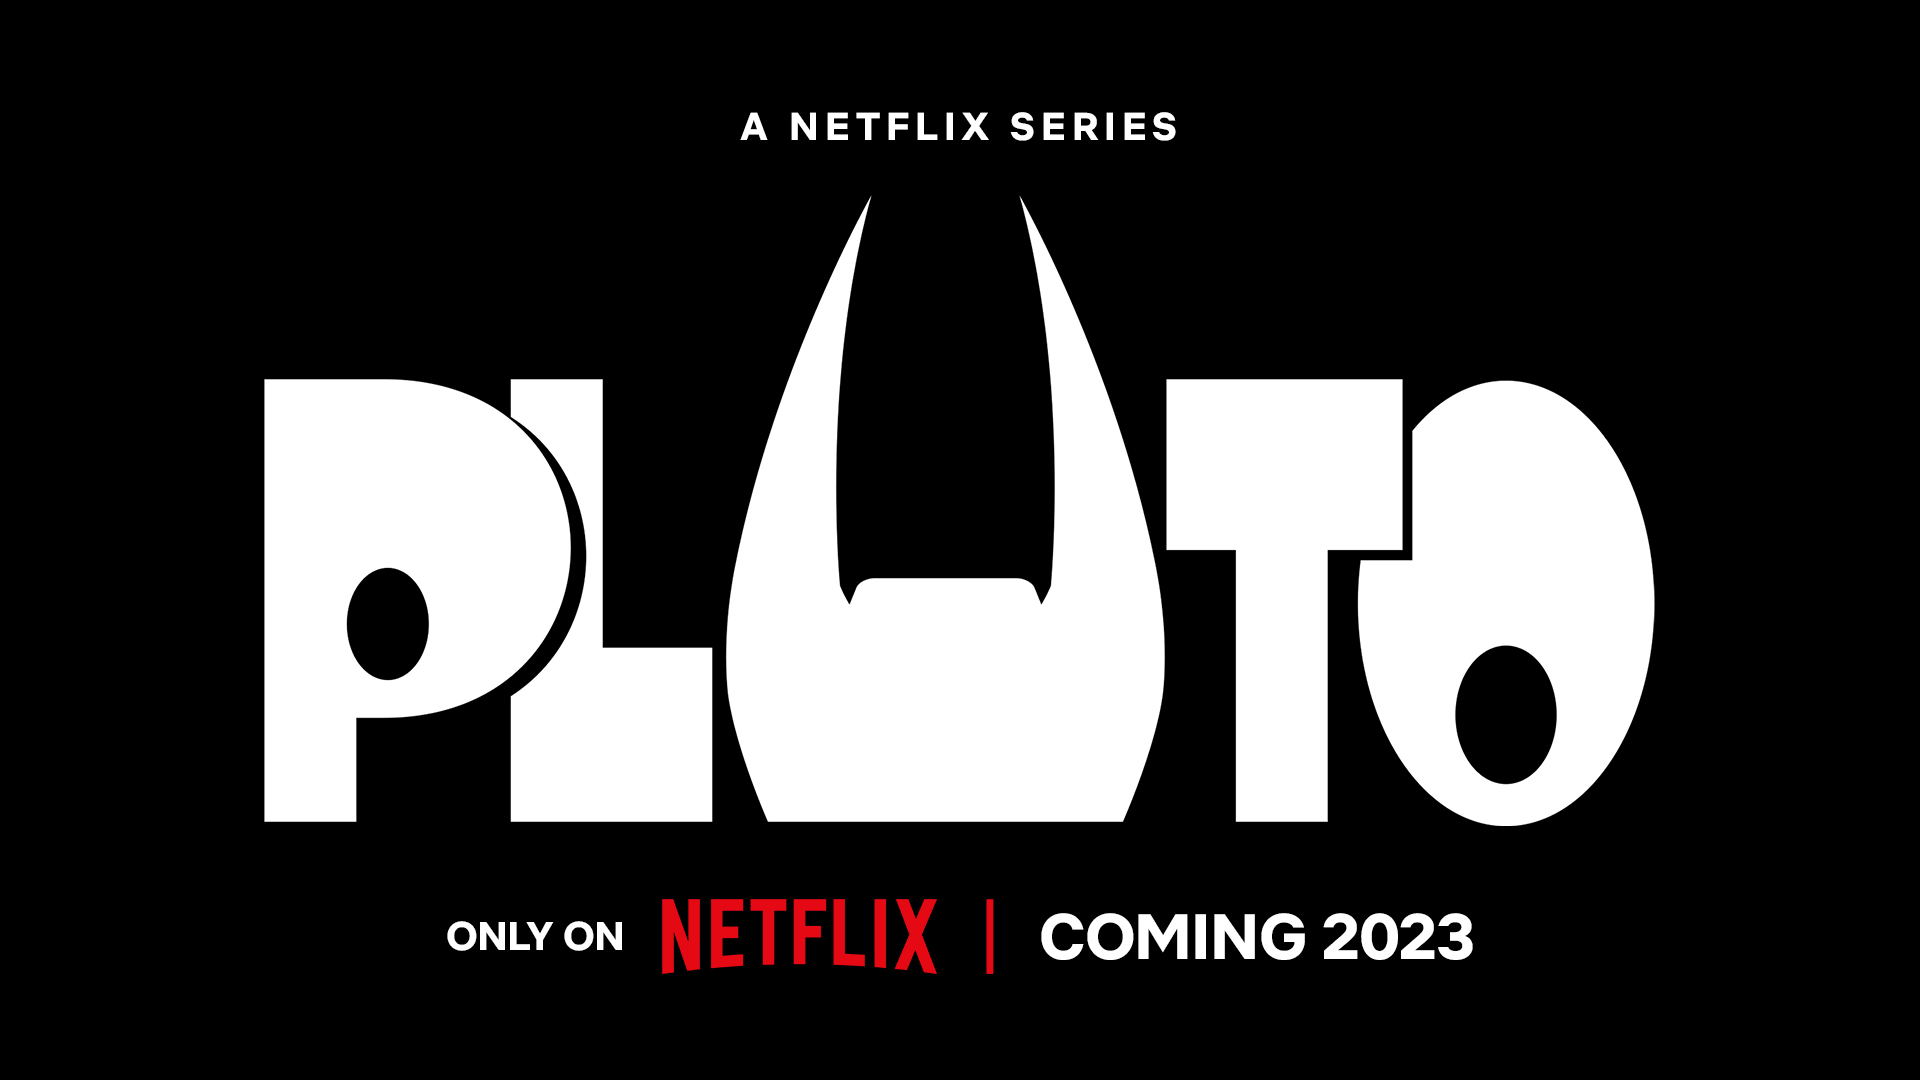 Netflix to Stream Pluto Anime Series in 2023